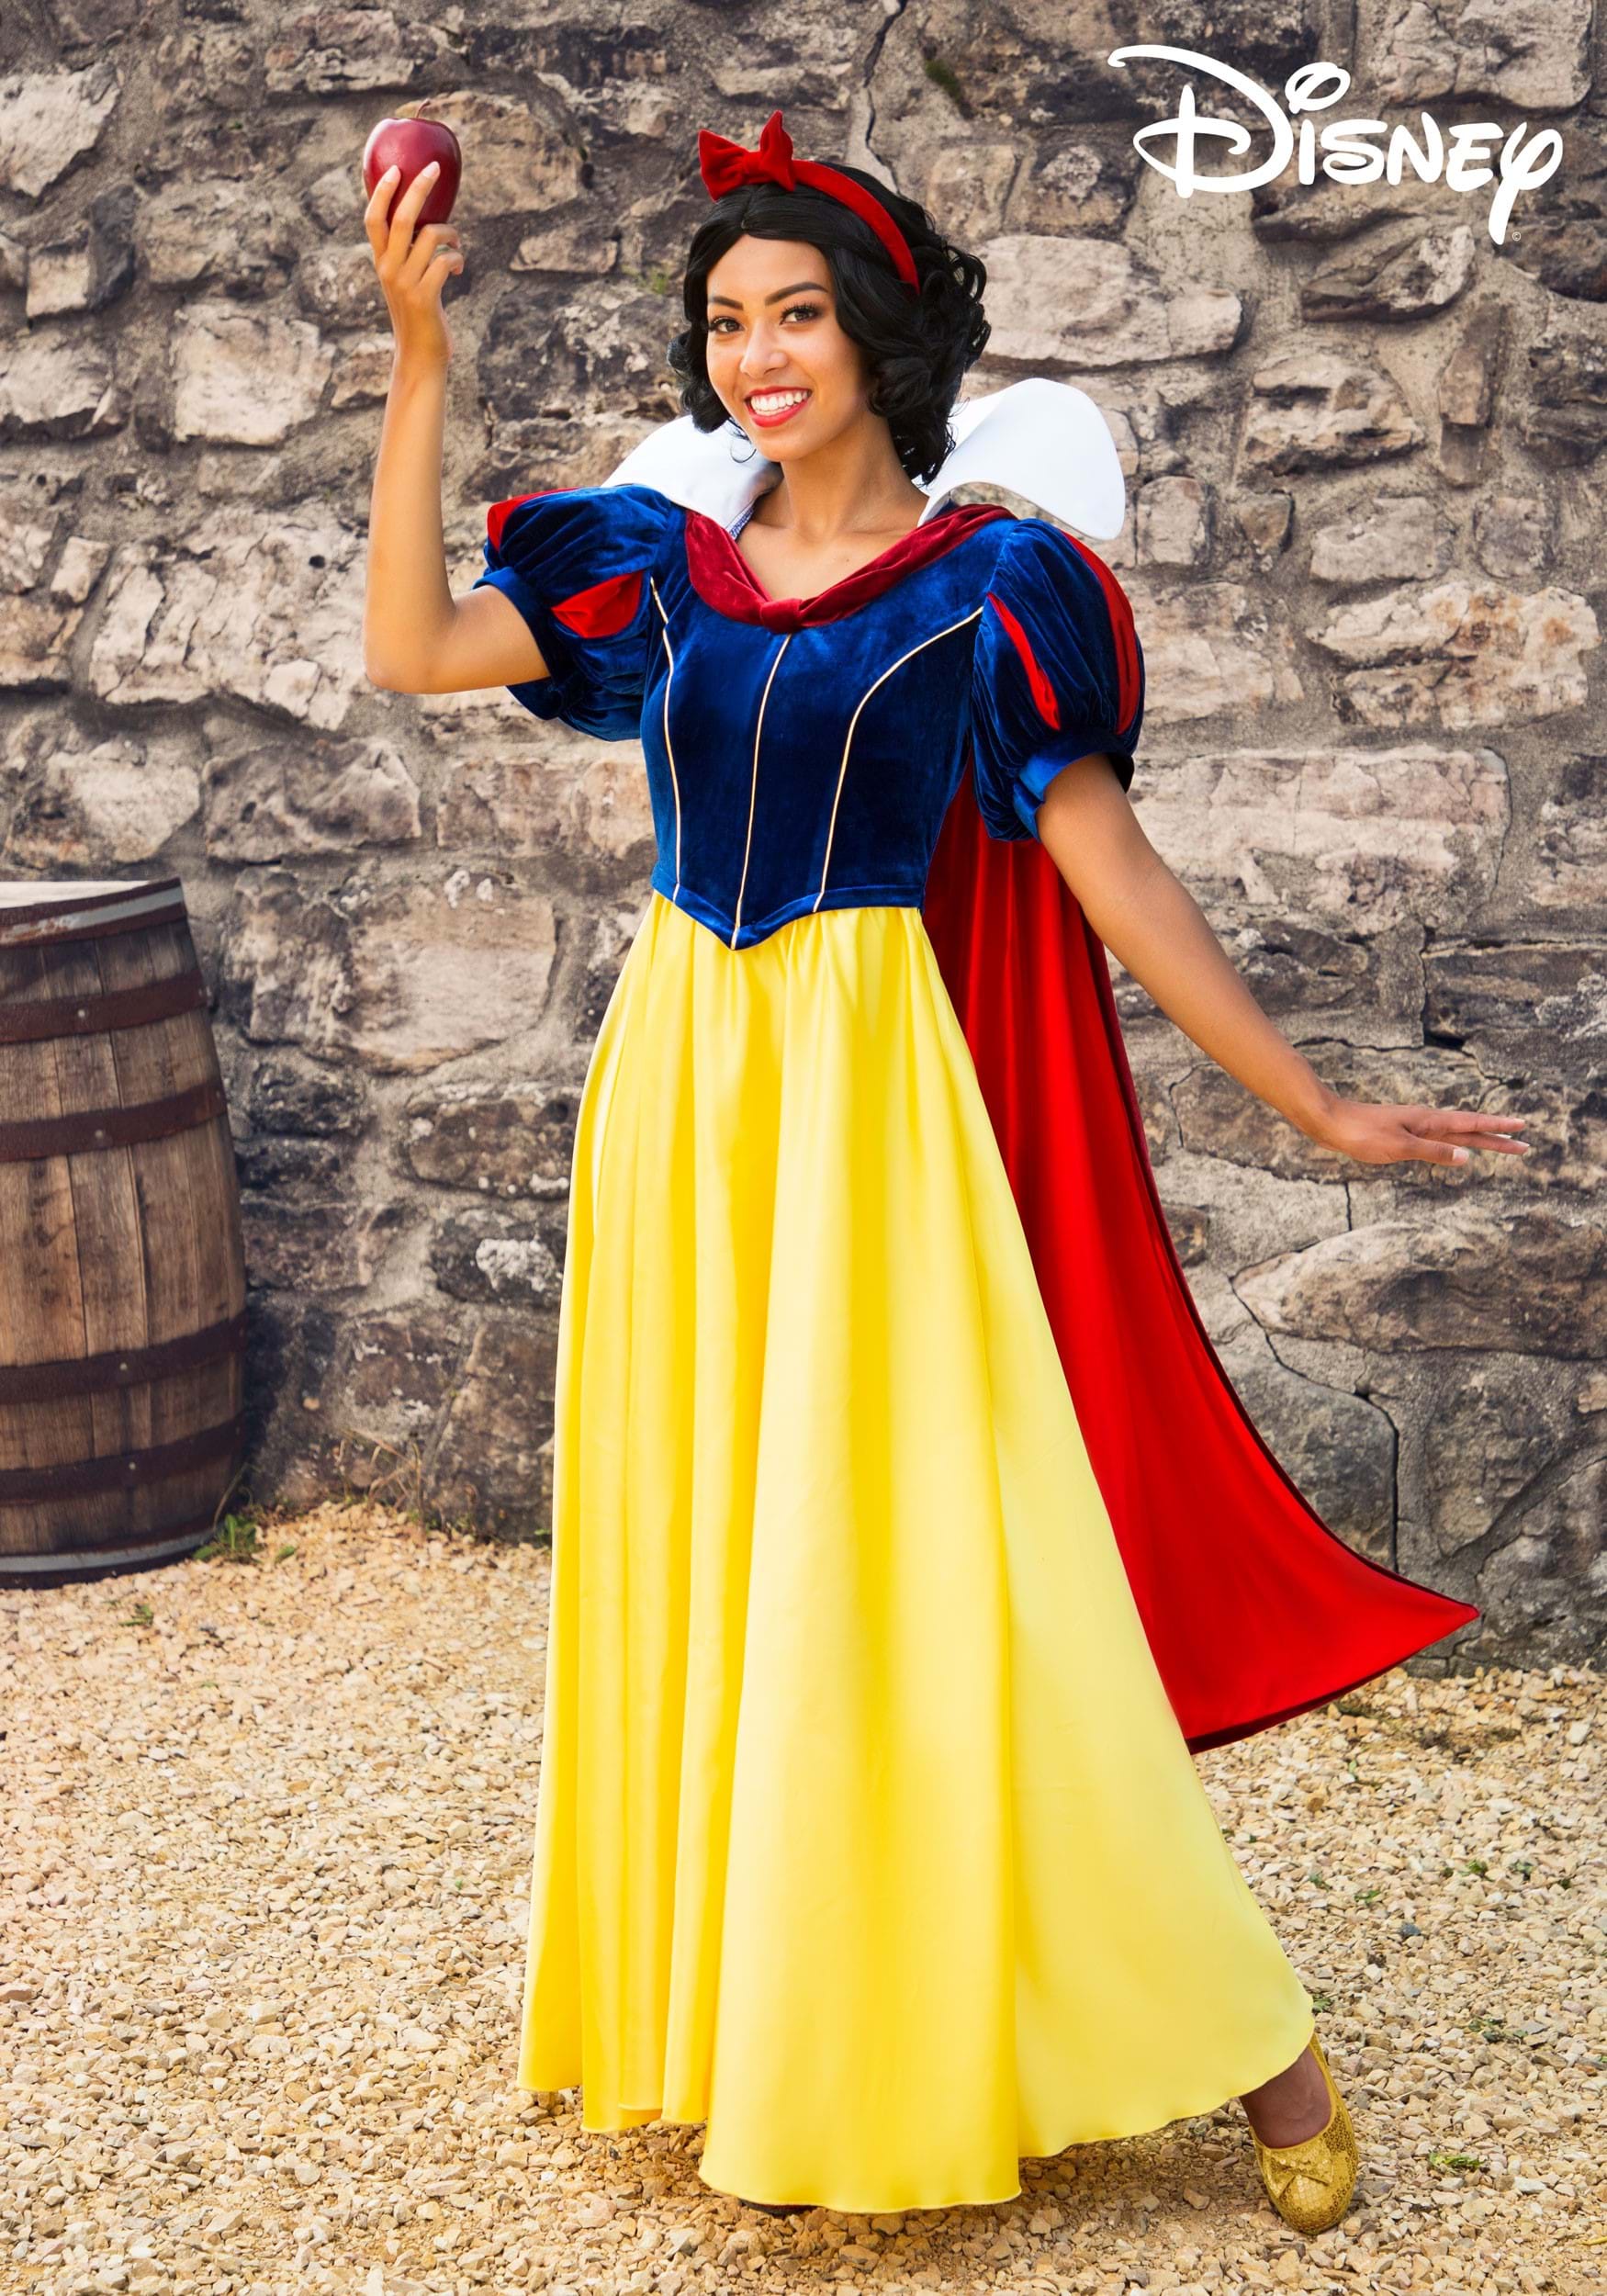 31 DIY Disney Princess Costumes That Will Make You Feel Like You